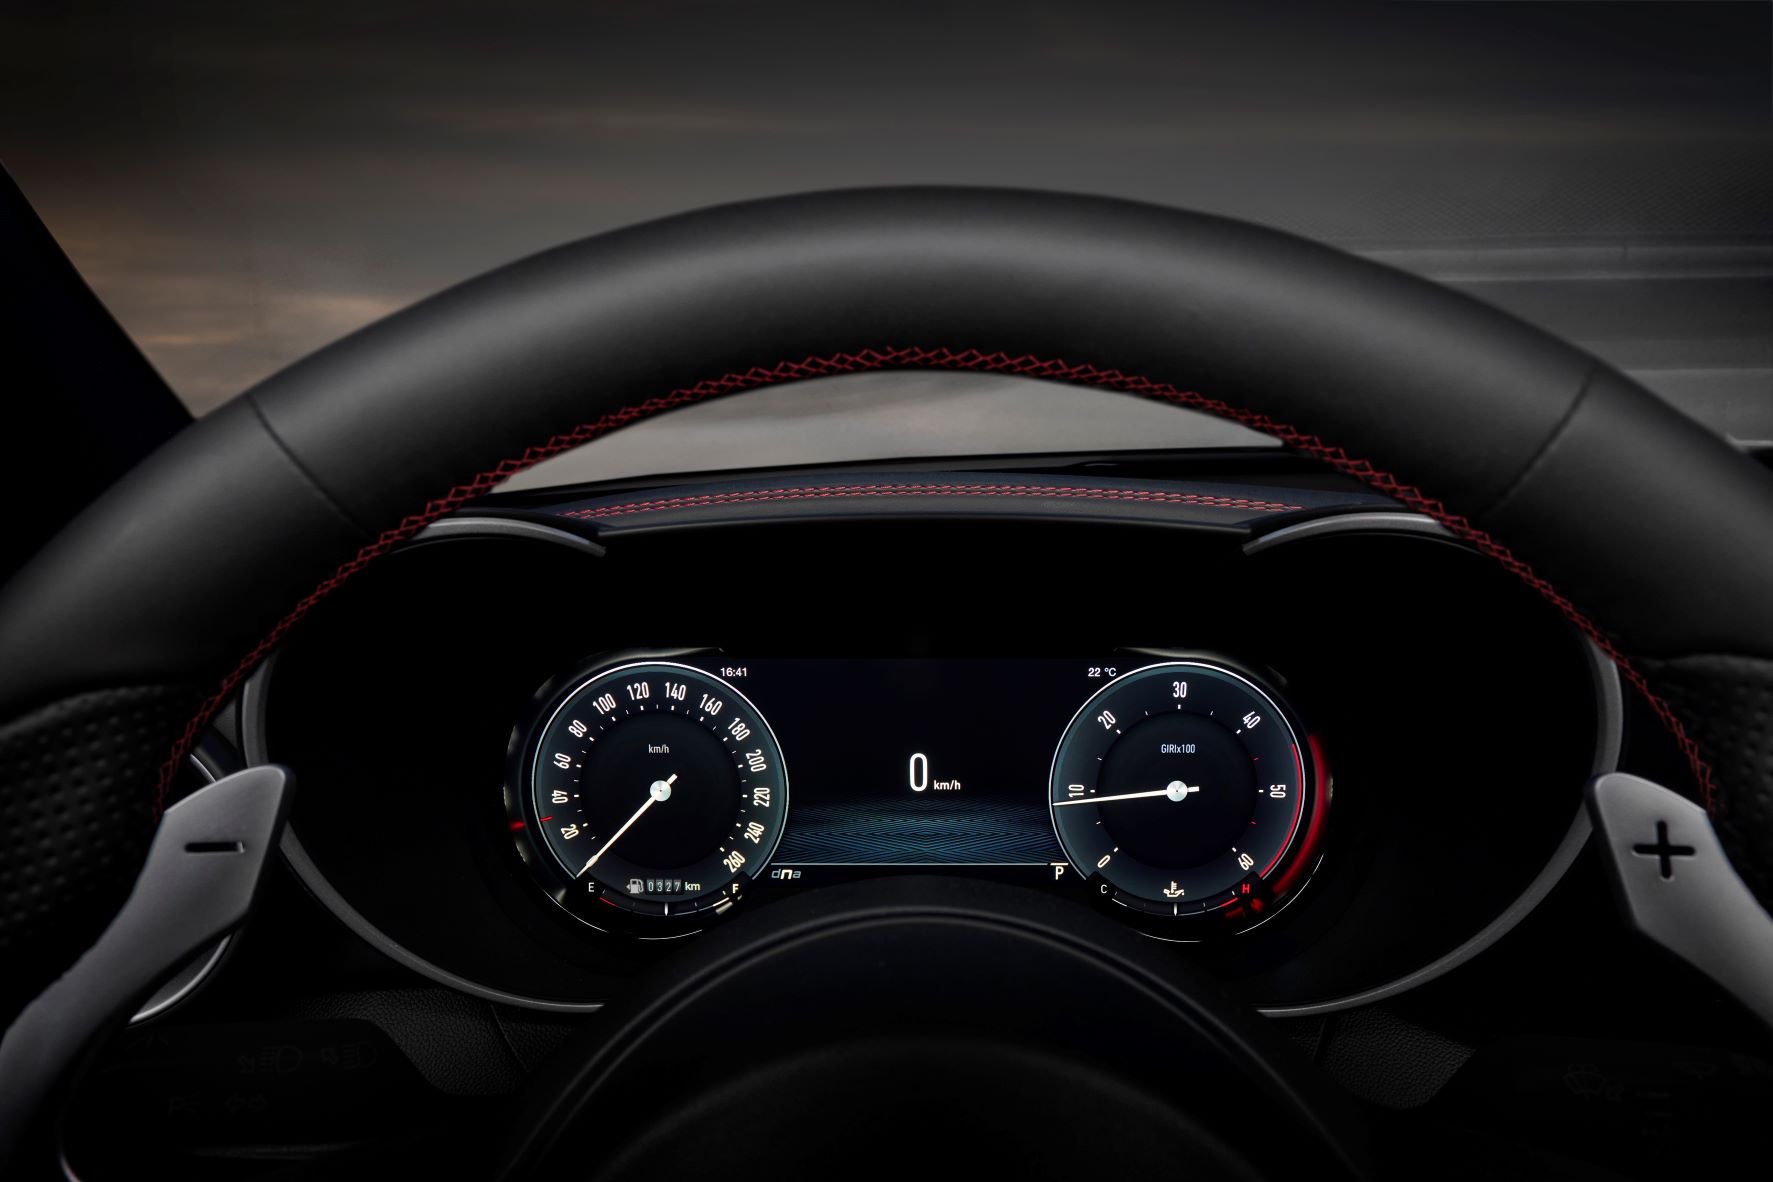 New digital instrument cluster on the dashboard of the 2023 Alfa Romeo Giulia sedan